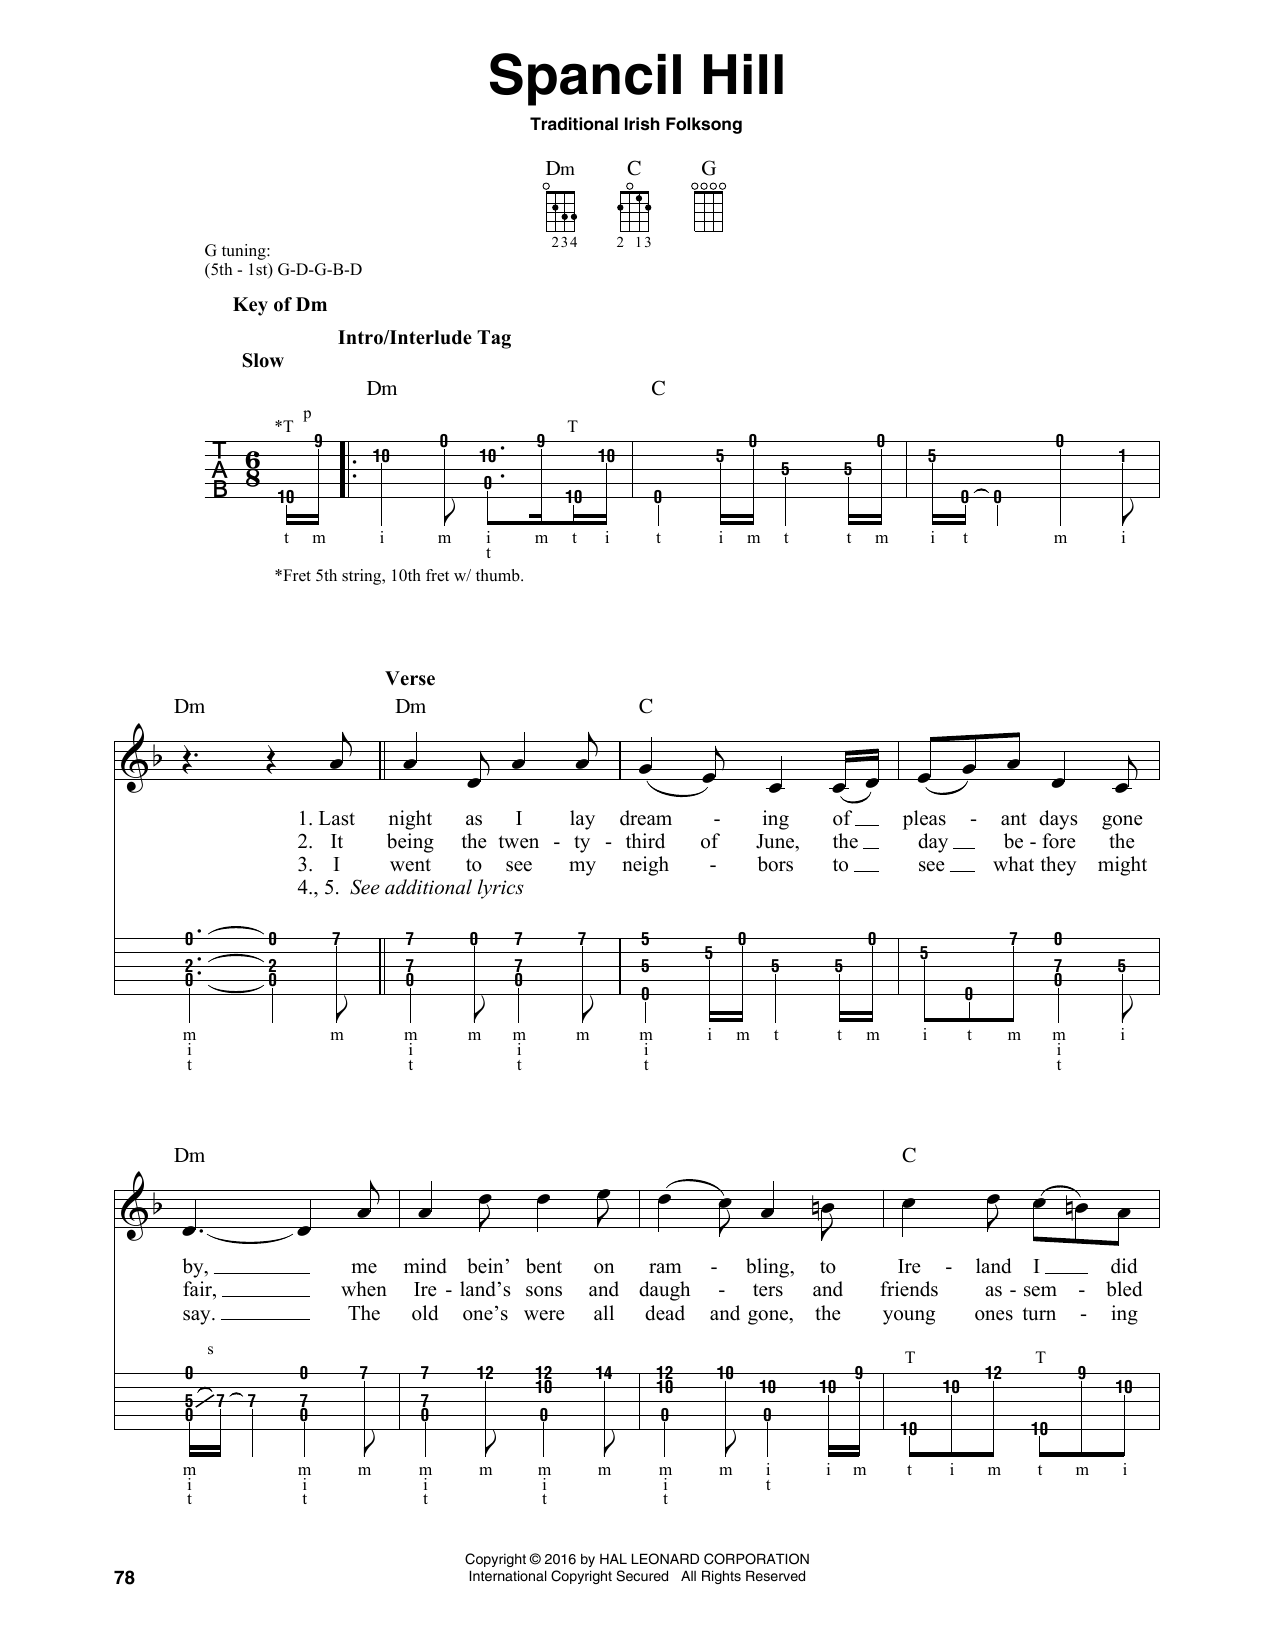 Traditional Irish Folk Song Spancil Hill Sheet Music Notes & Chords for Banjo - Download or Print PDF